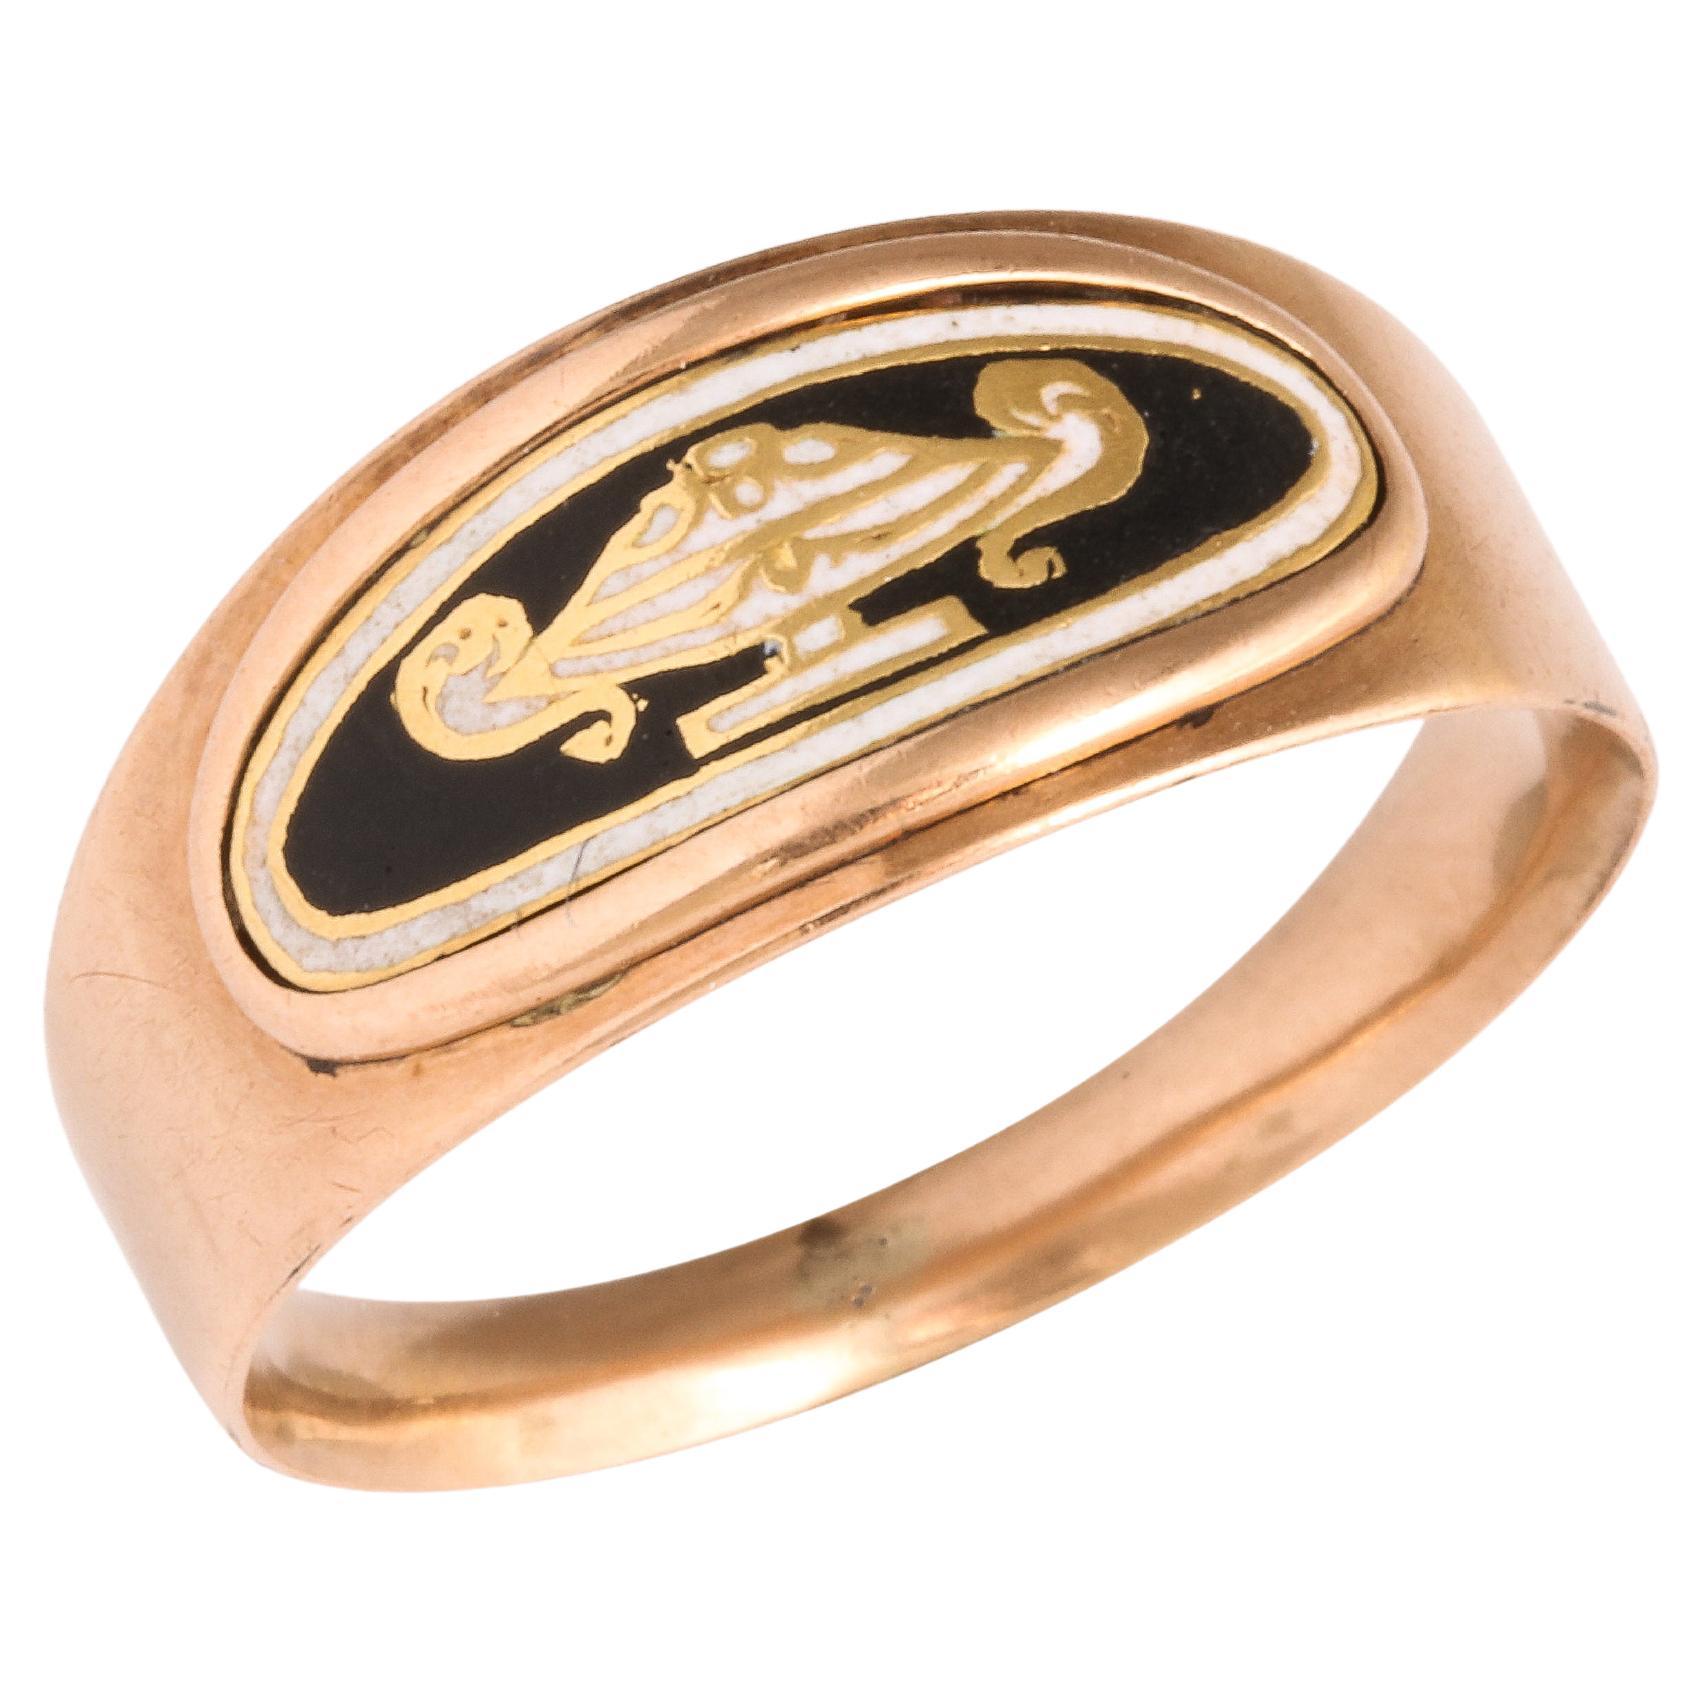 Georgian Gold and Enamel Urn Band Ring 